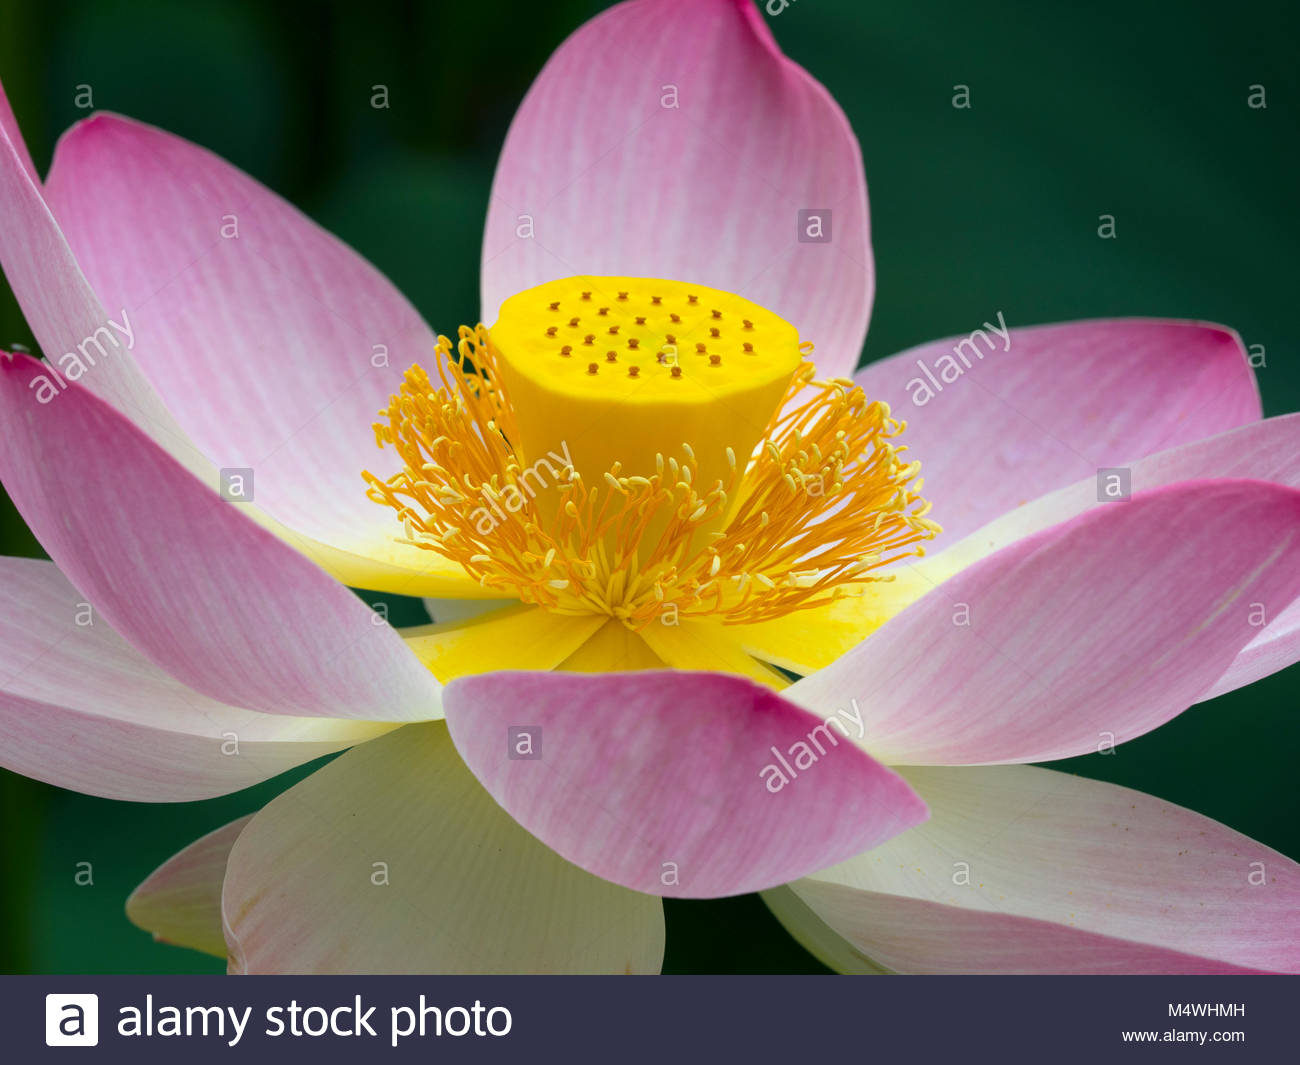 india lotus garden stock photos & india lotus garden stock images